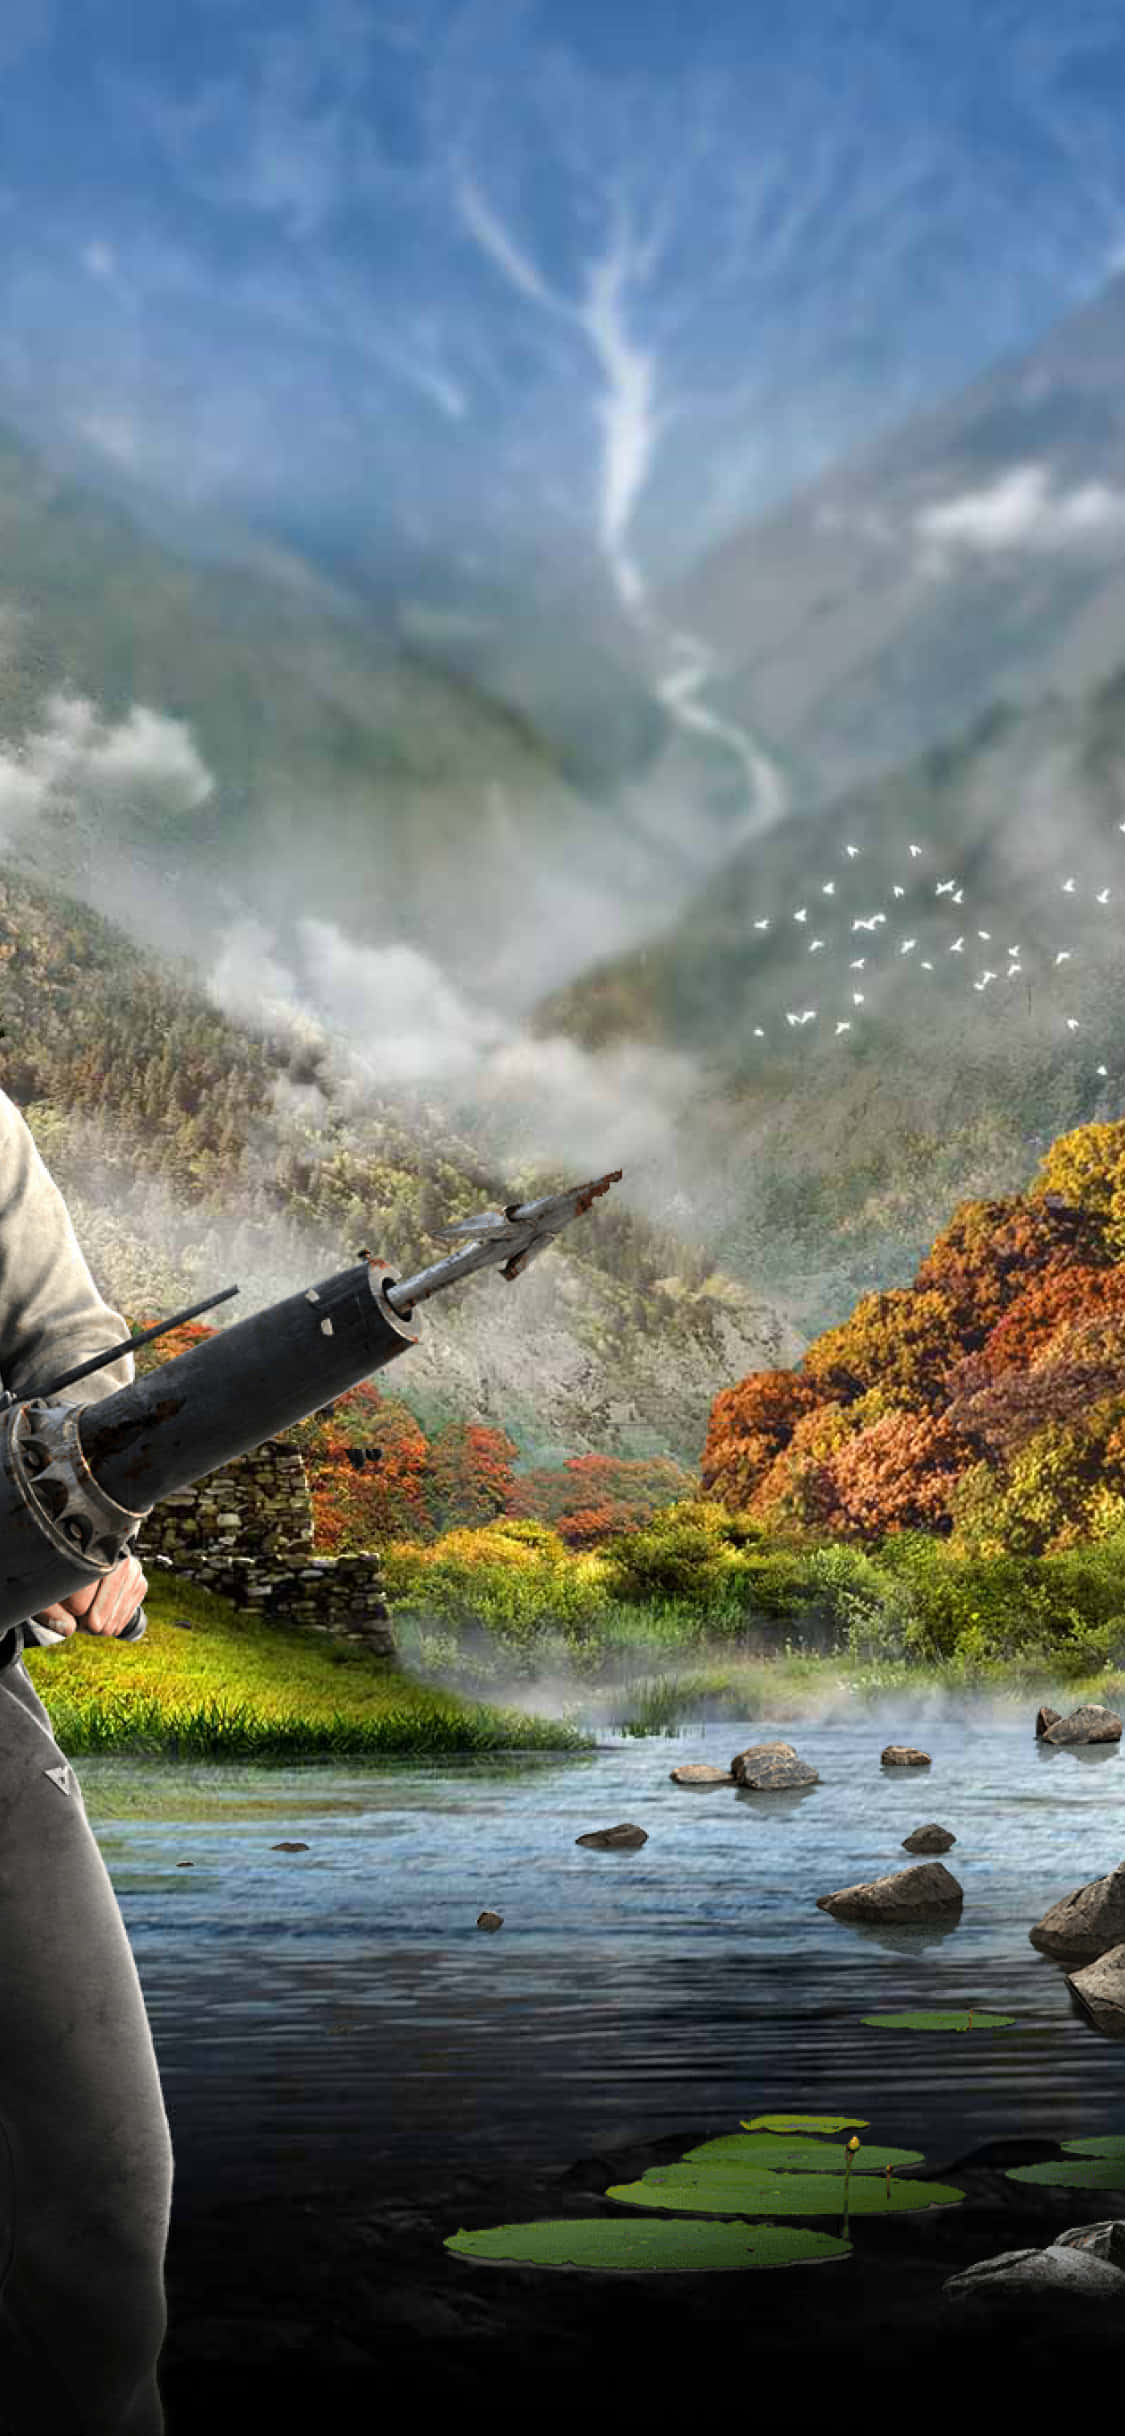 En mand med et gevær står foran en sø